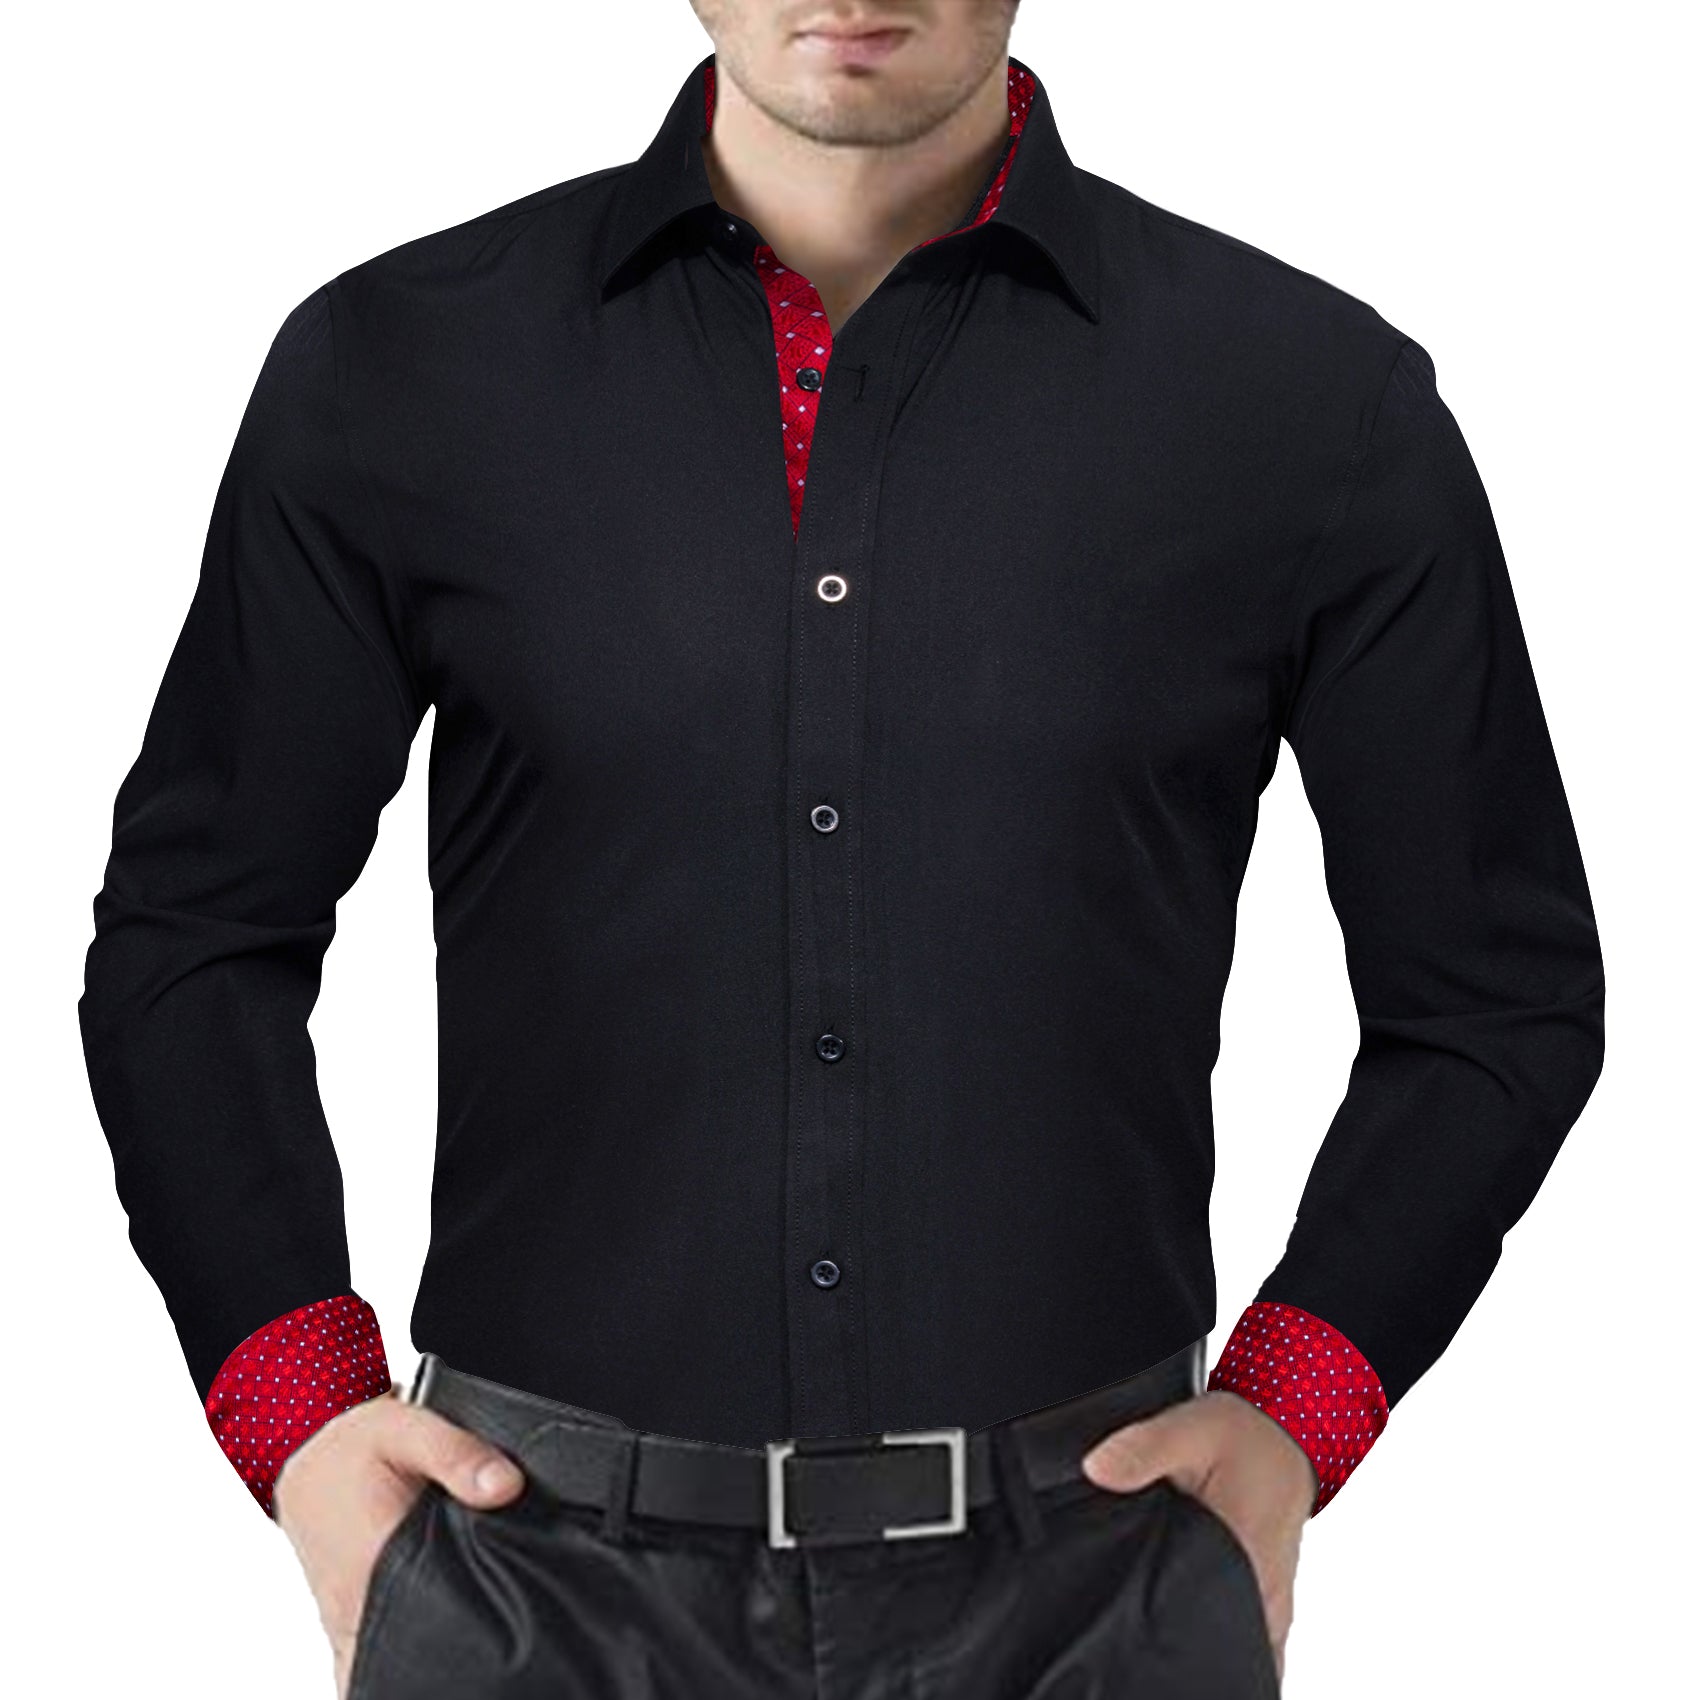 Barry.wang Formal Black Red Splicing Men's Business Shirt